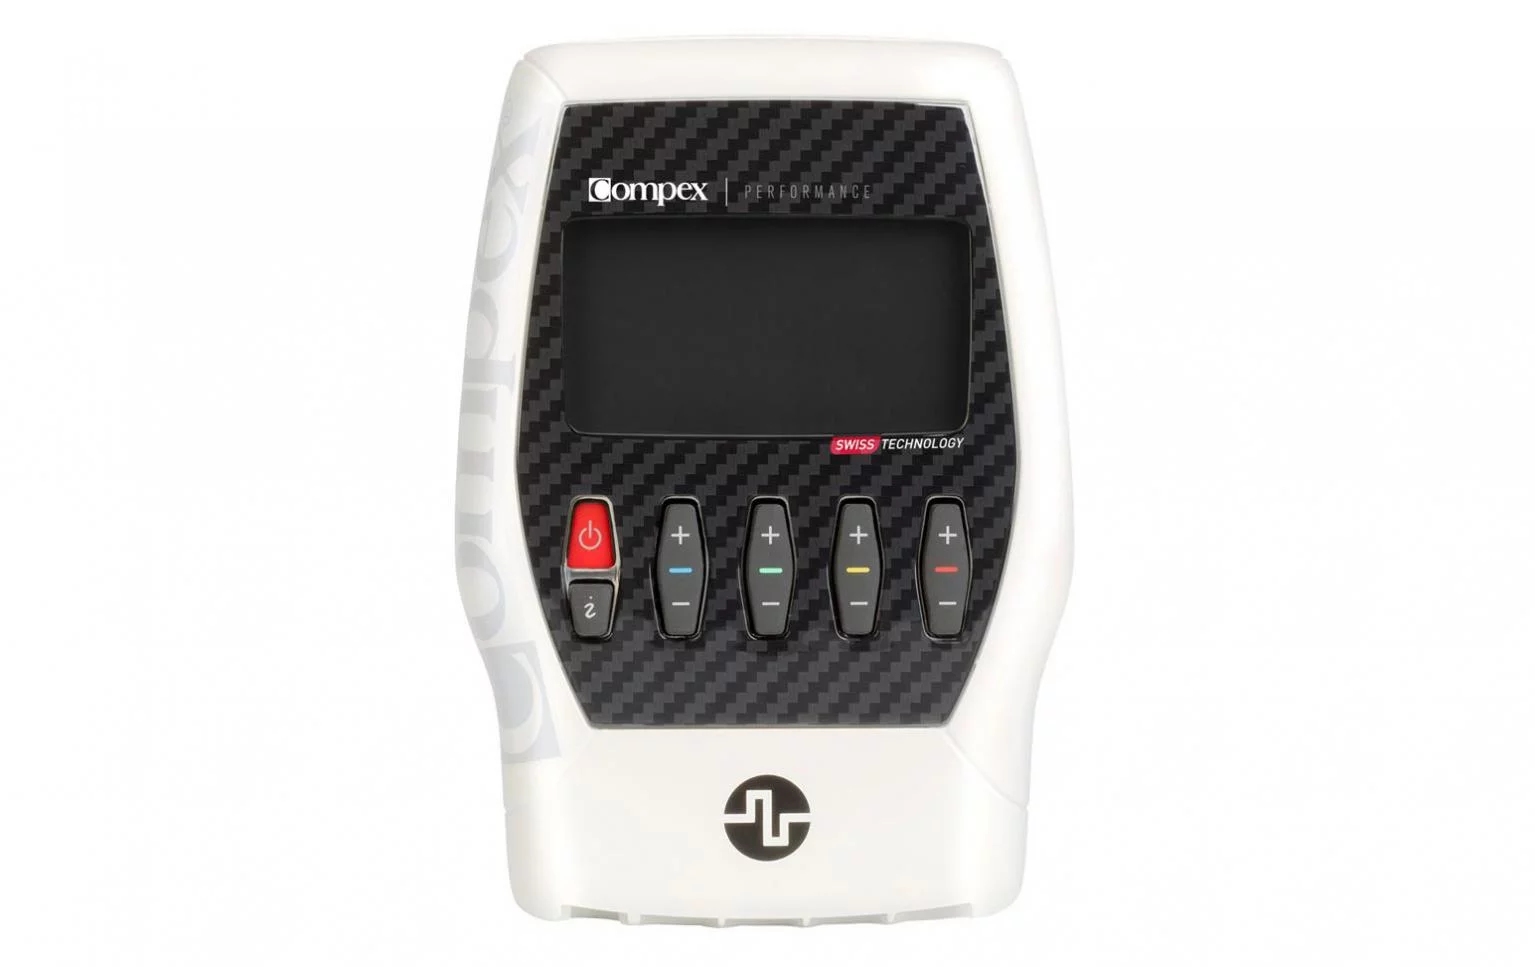 Compex Wireless USA 2.0 Muscle Stimulator Tens Unit Kit Used